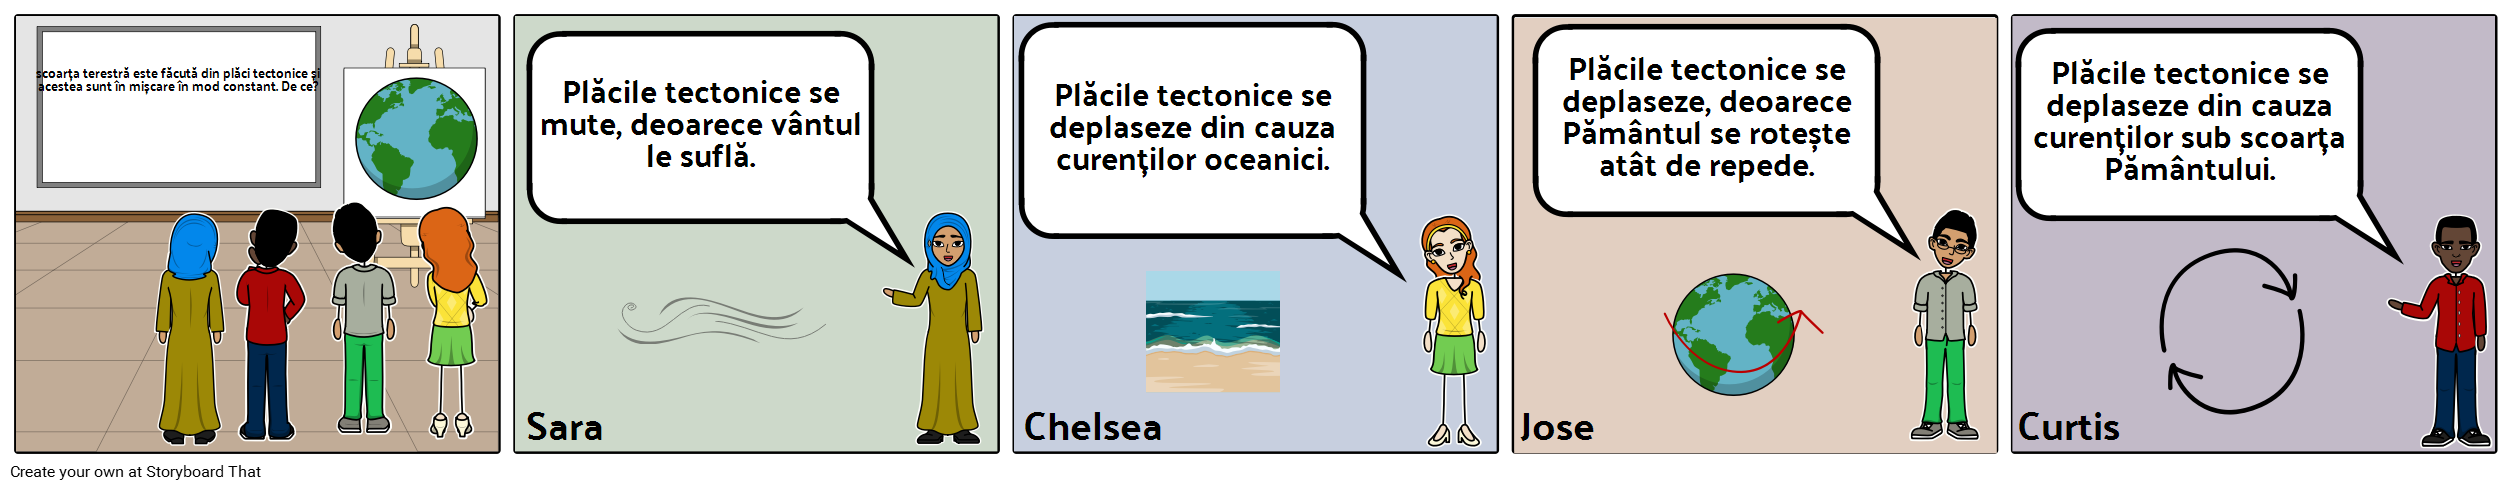 Discuție Storyboard - HS - Plăci Tectonice